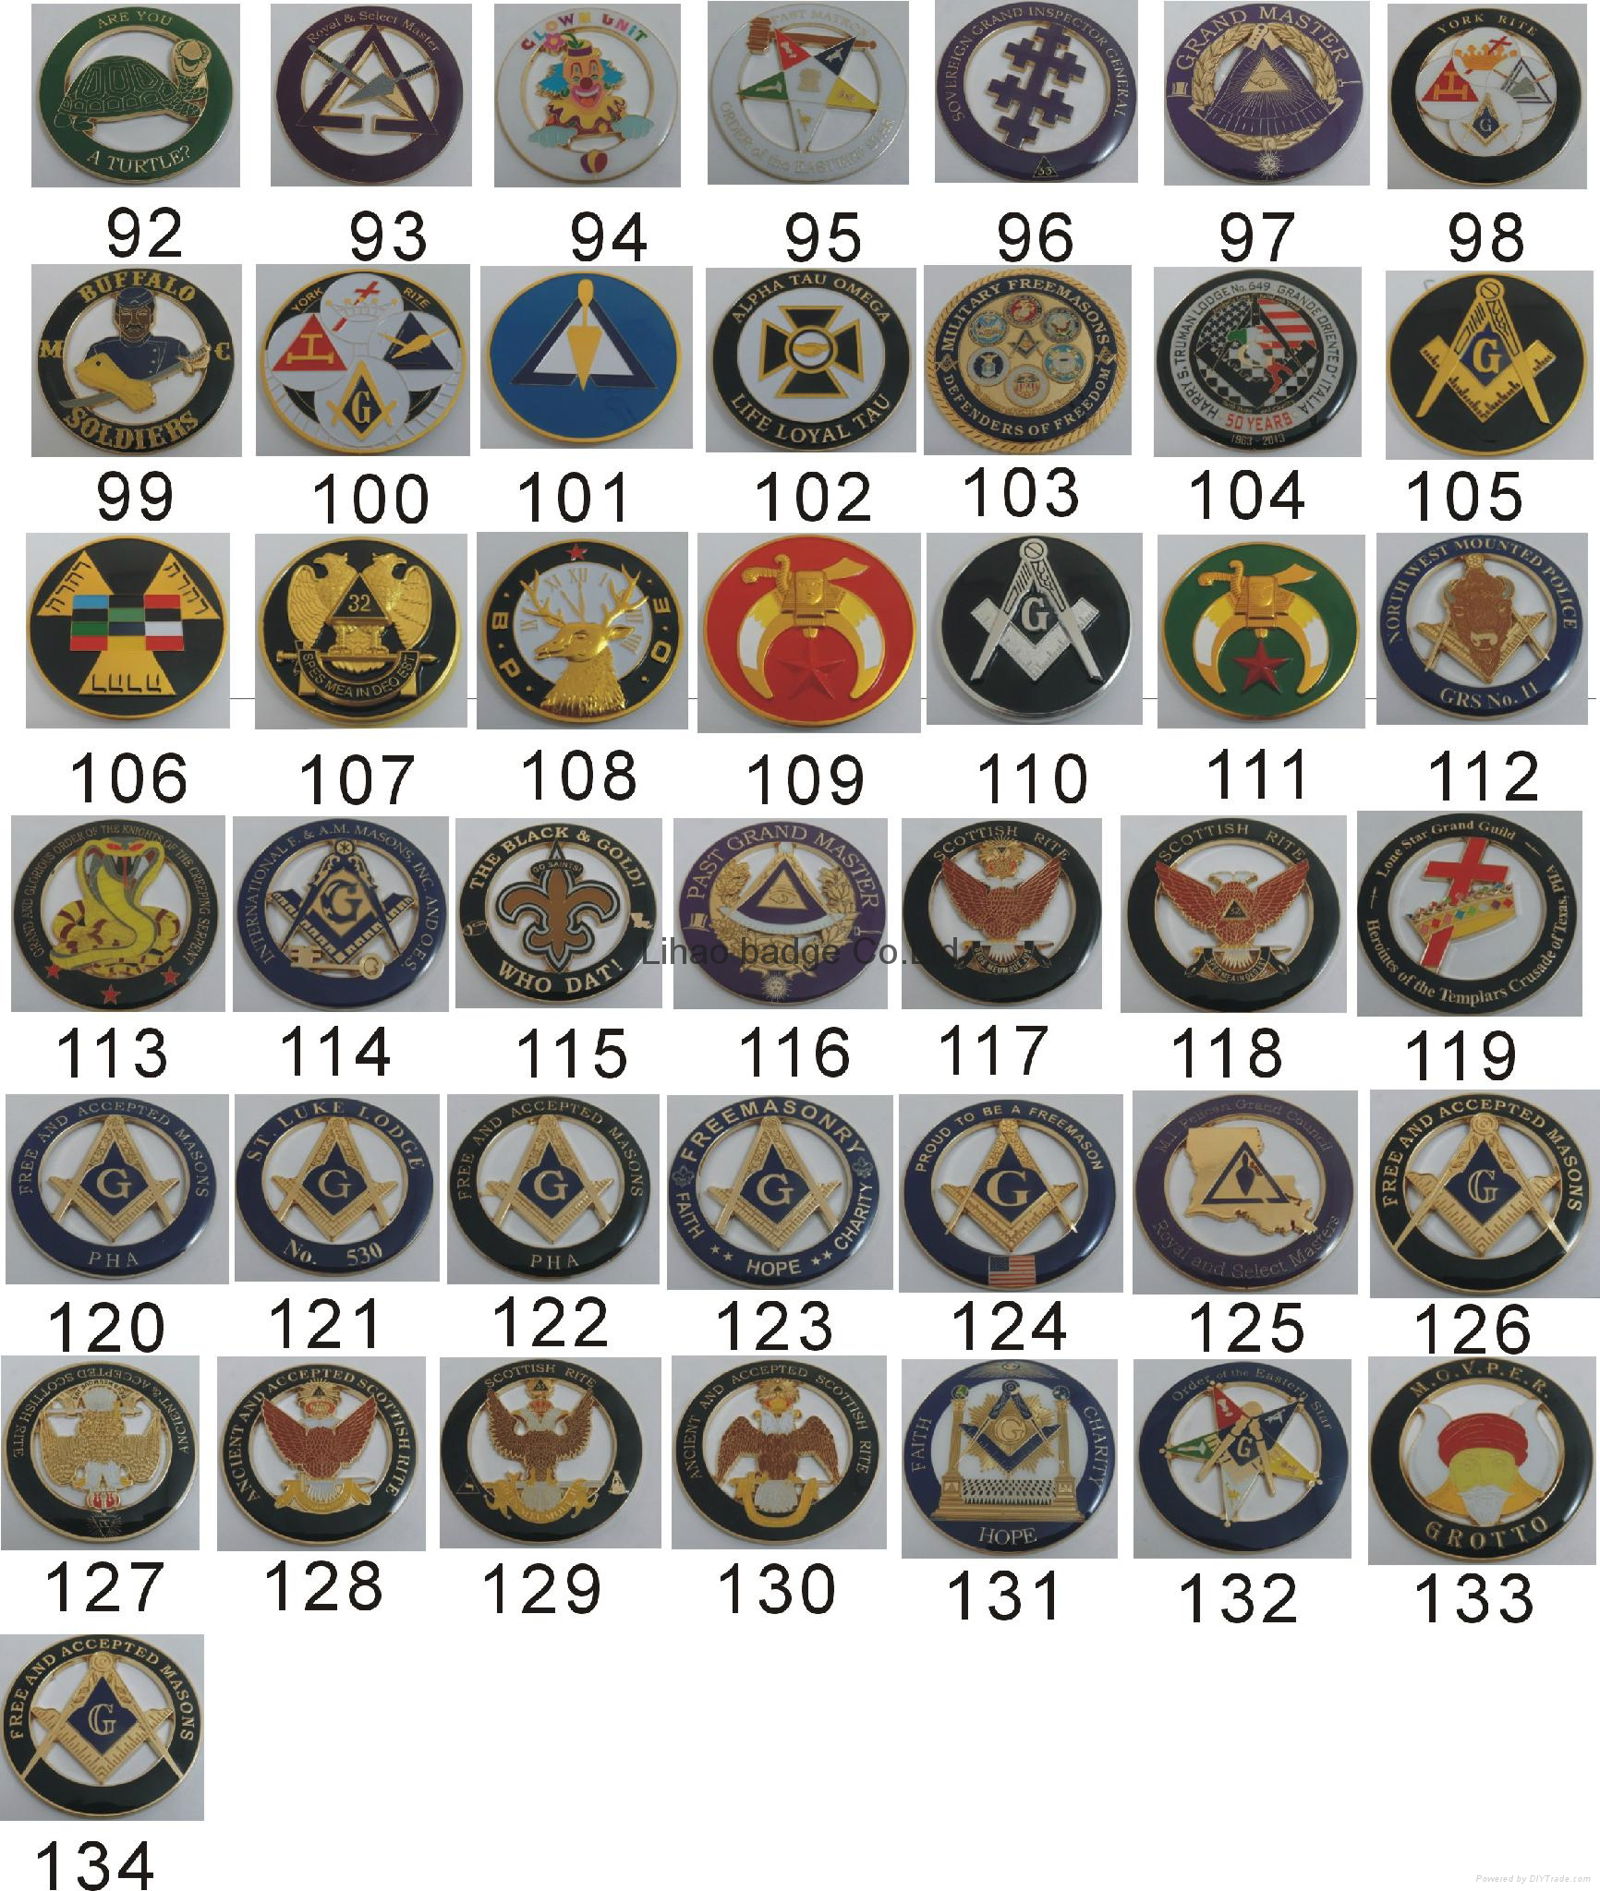 2015 Hot sale Masonic metal pin badge 5